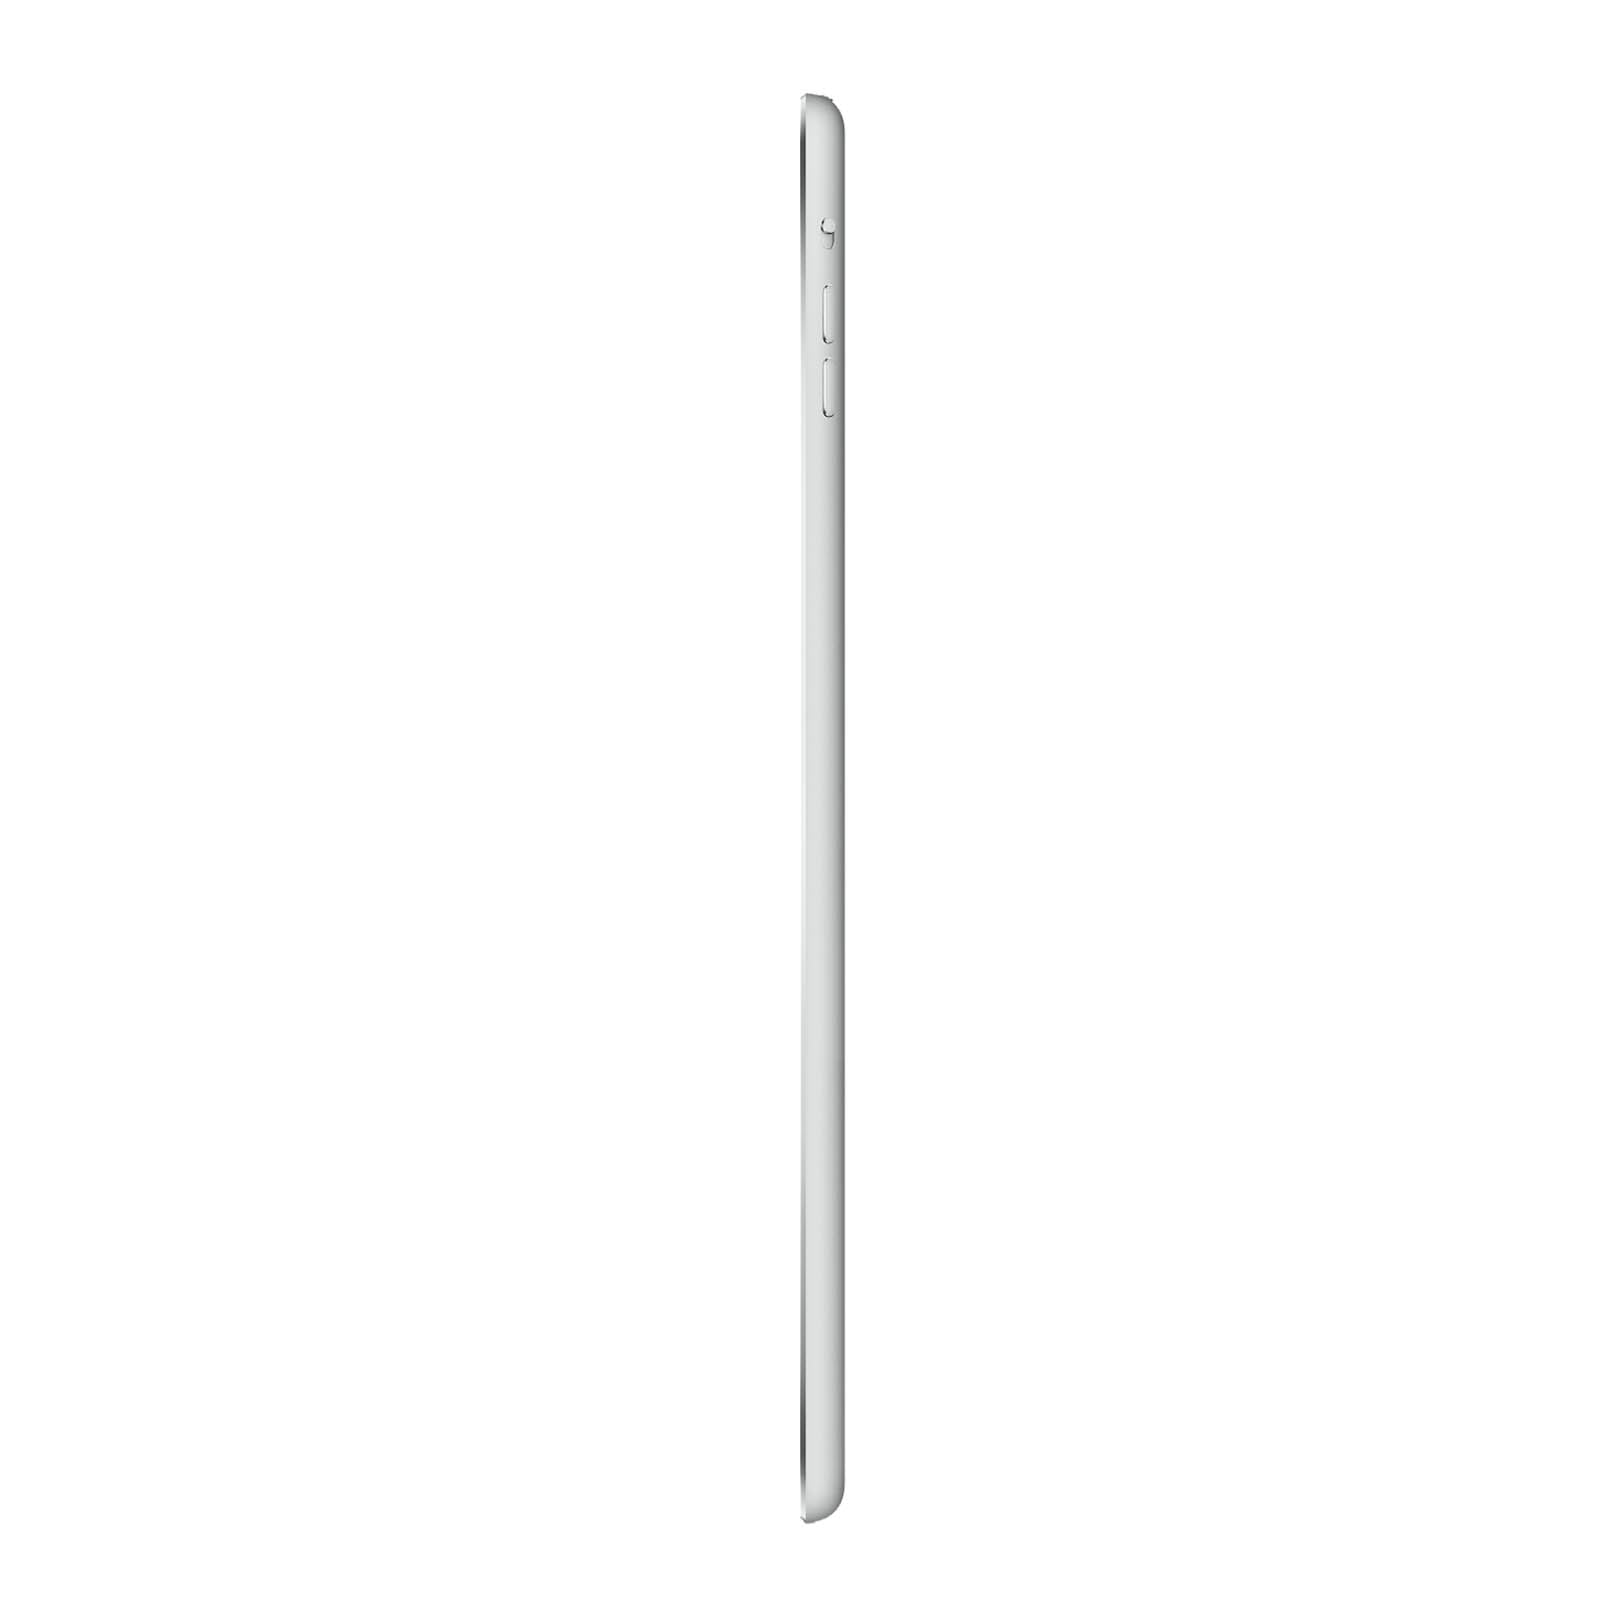 iPad Air 16GB WiFi Silver Good-Unlocked